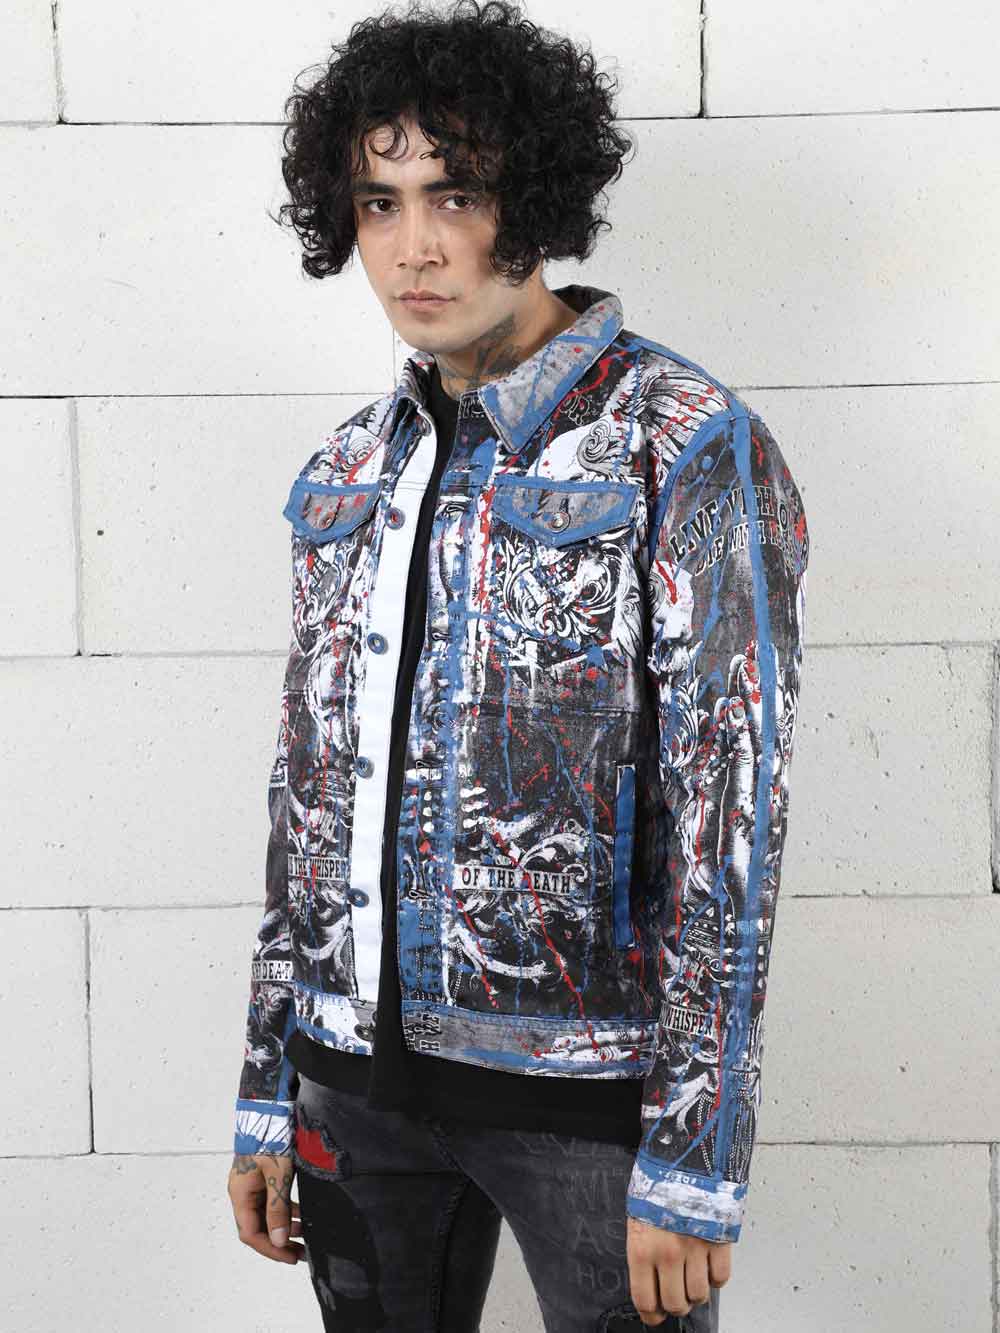 A man donning a LA VIDA LOCA denim jacket, showcasing his trendy streetwear style.